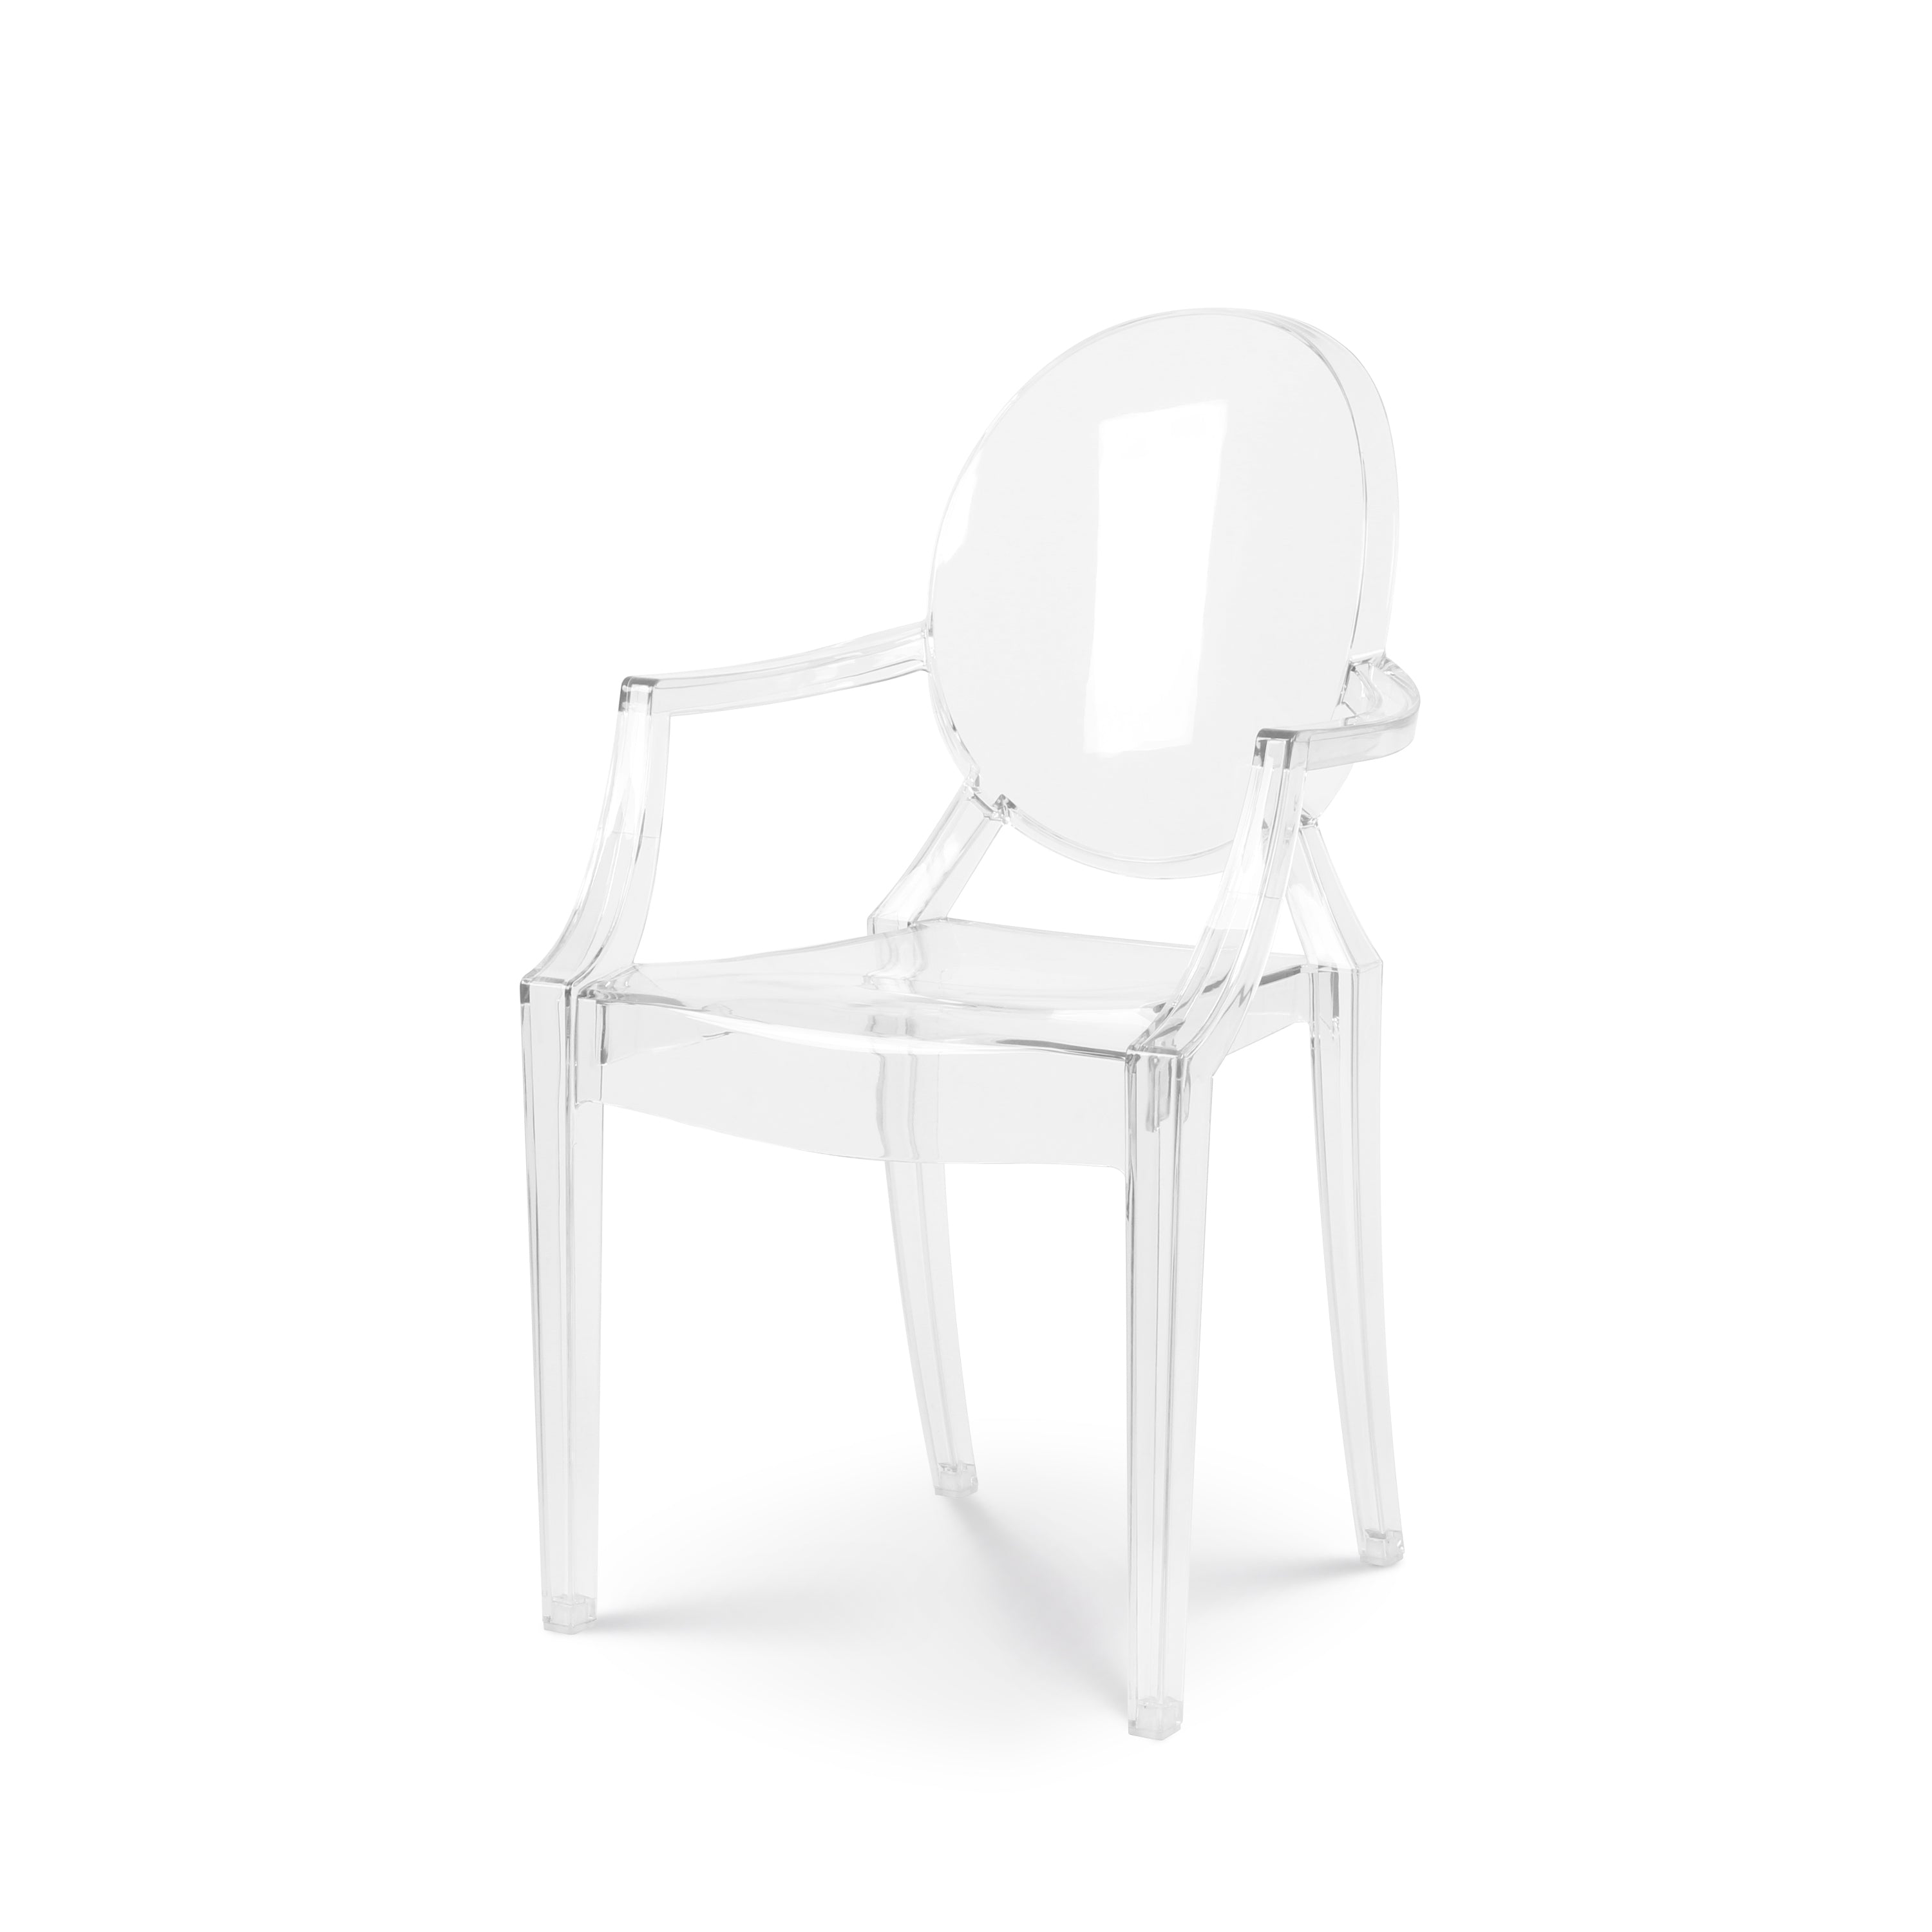 Silla fantasma de policarbonato con brazos, sillas de comedor transparentes  de grado comercial, sillas transparentes con respaldo flexible cómodo